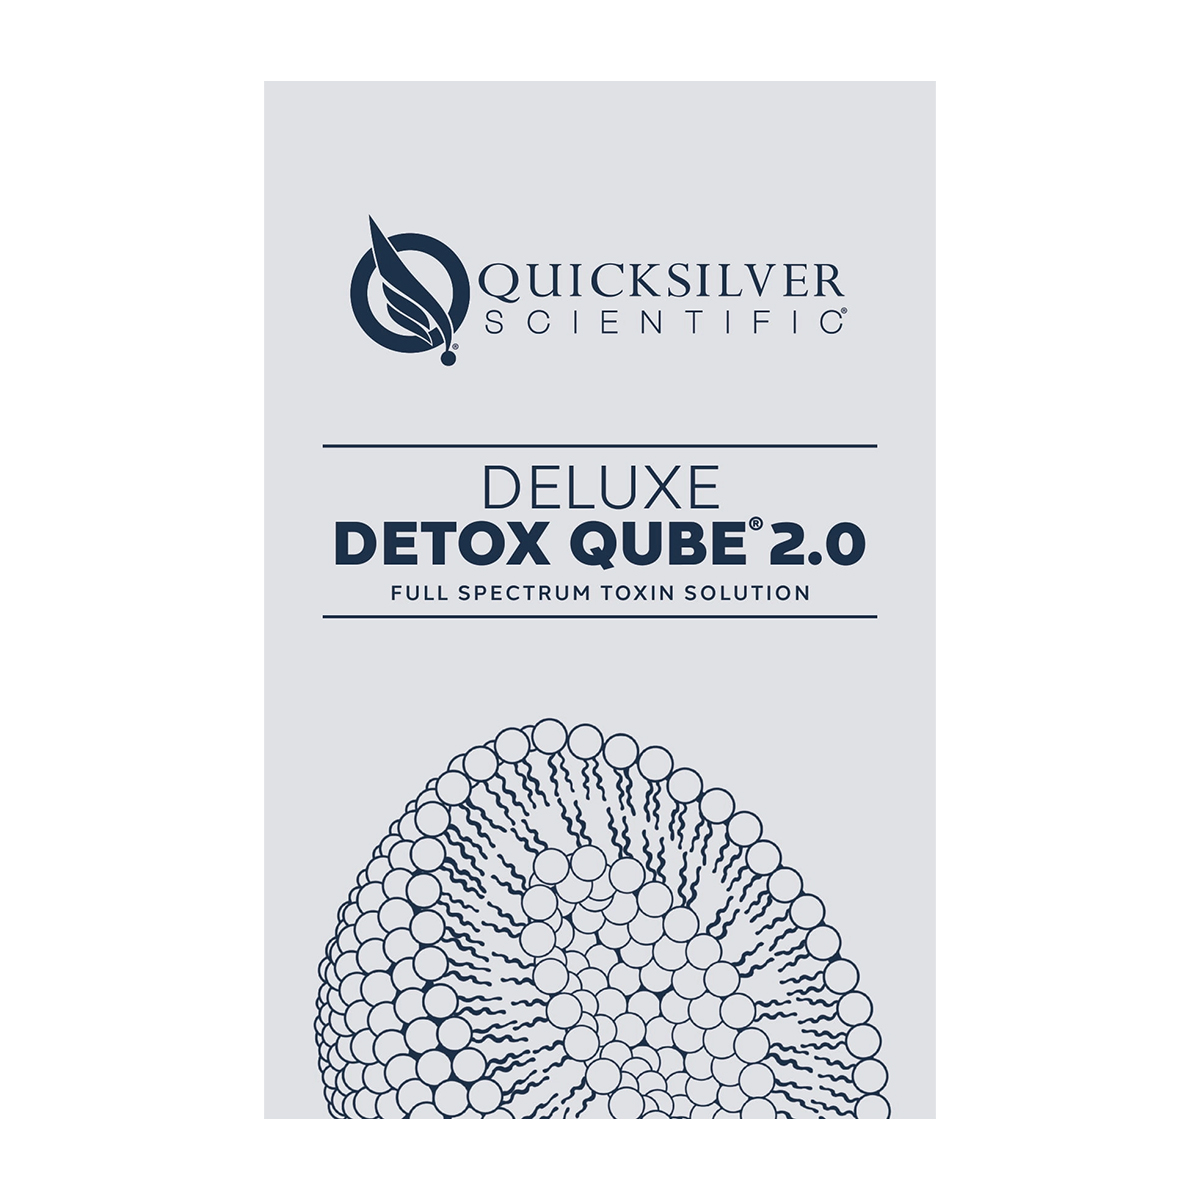 Deluxe Detox Qube 2.0